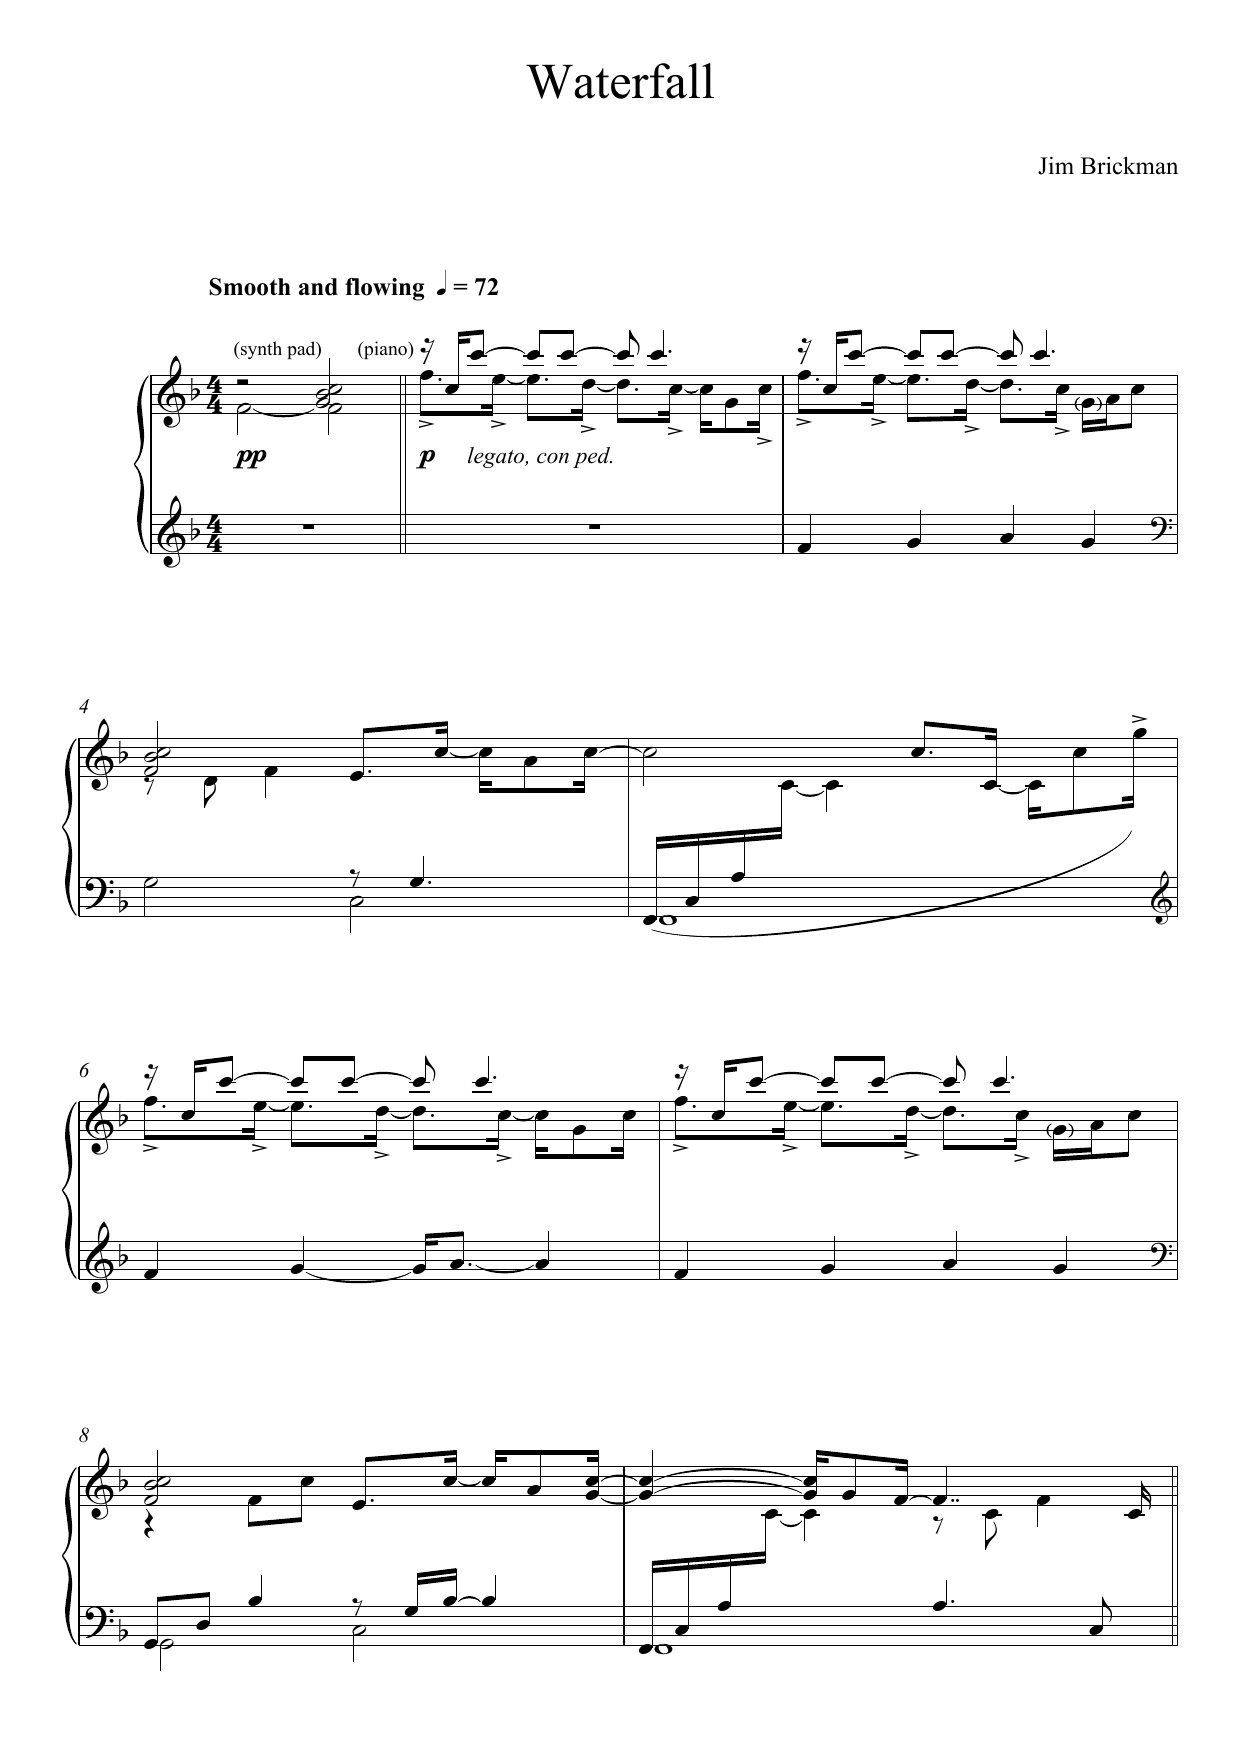 Jim Brickman Waterfall Sheet Music Notes & Chords for Piano - Download or Print PDF